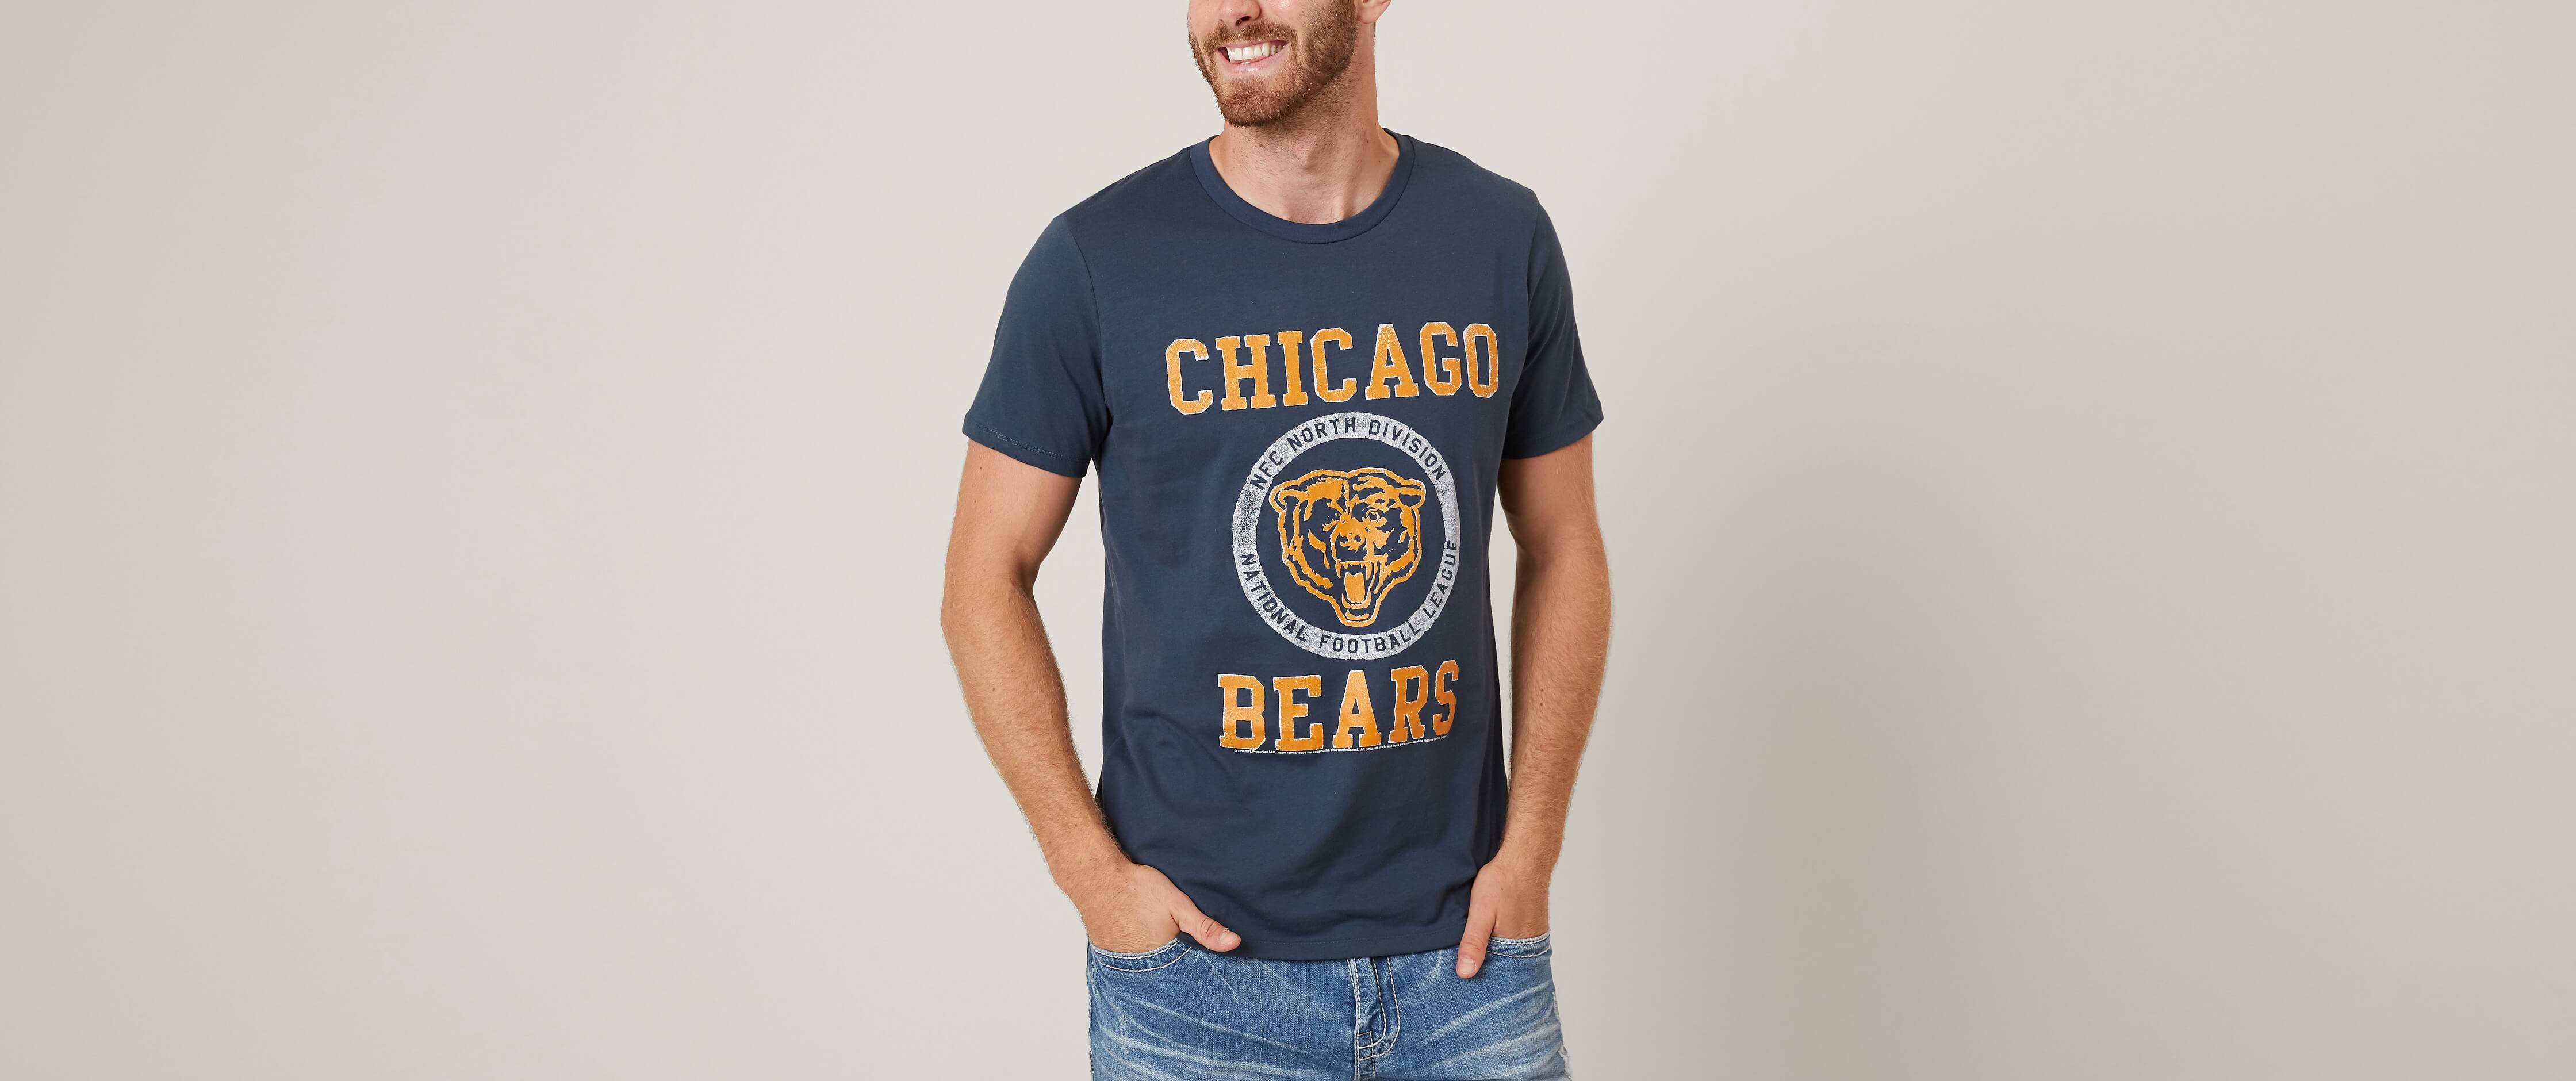 chicago bears mens t shirt